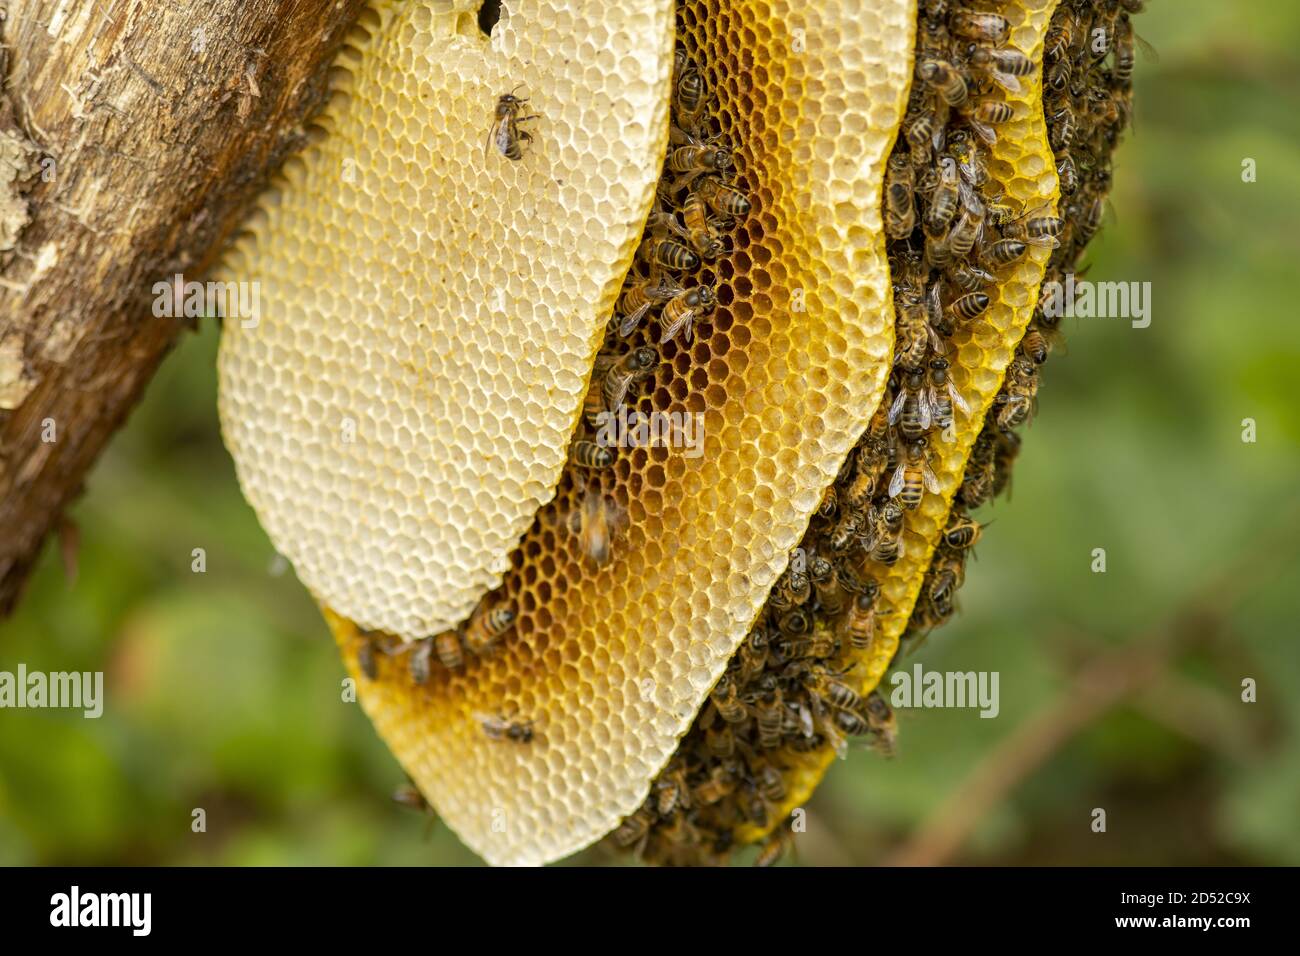 Details of a bee habitat b Stock Photo